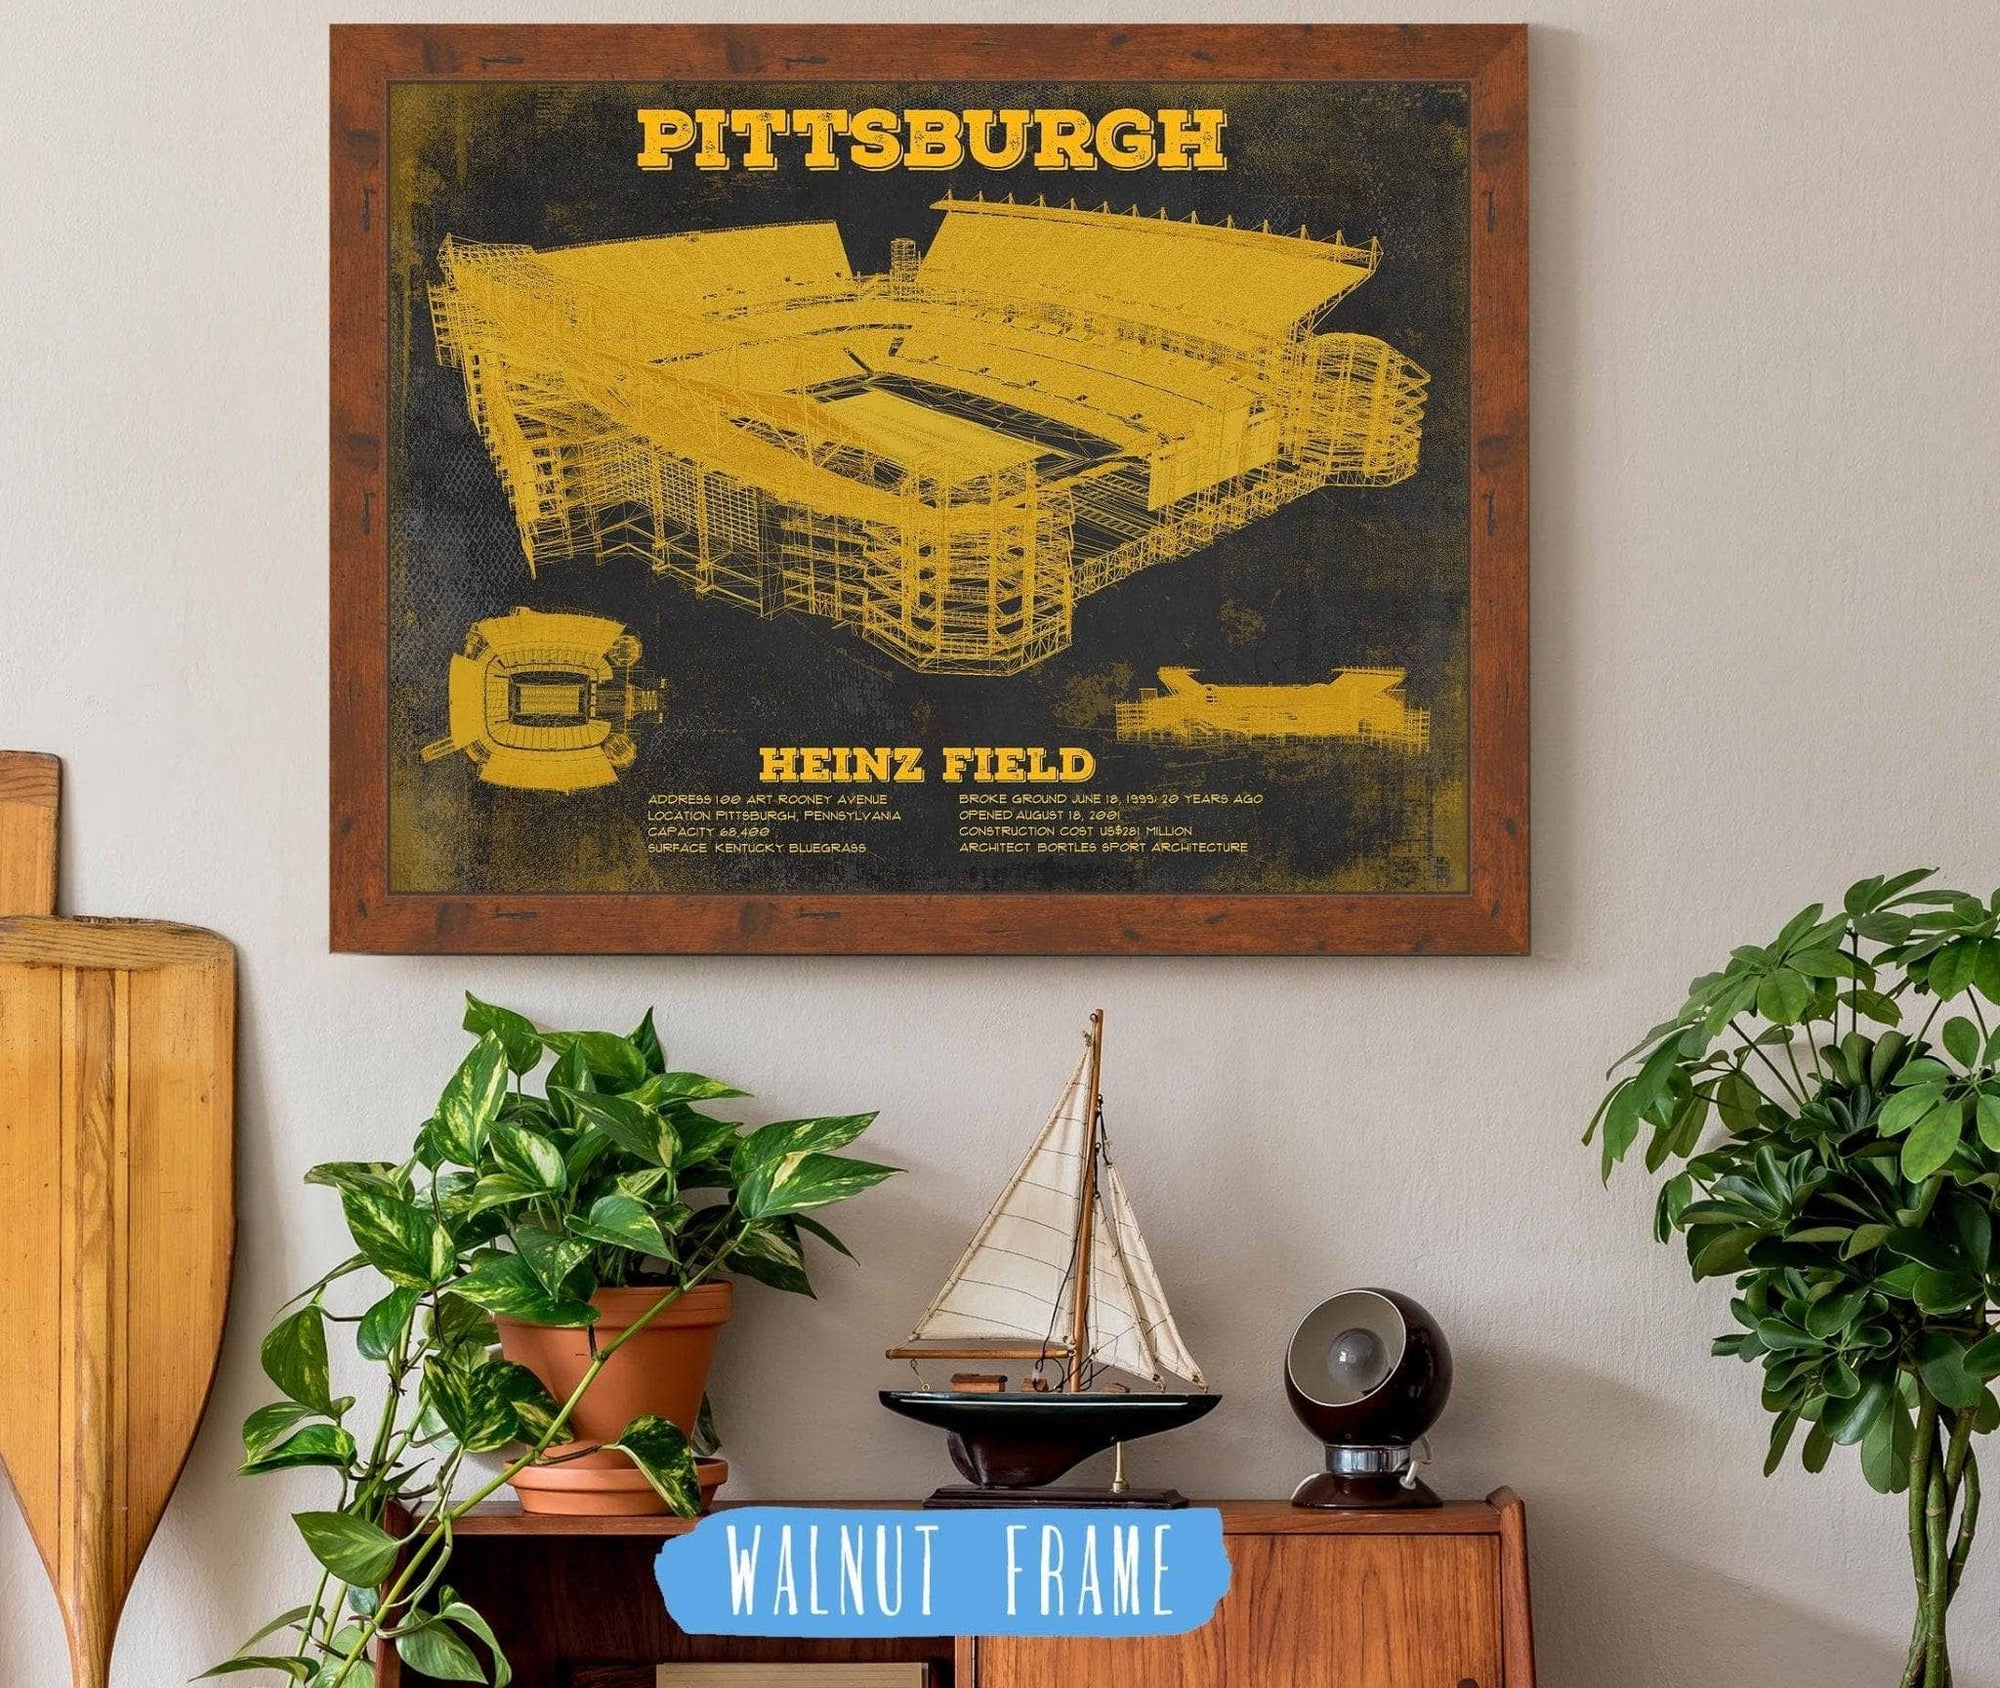 Cutler West Pro Football Collection 14" x 11" / Walnut Frame Pittsburgh Steelers Stadium Art Team Color- Heinz Field - Vintage Football Print 835000001-TOP